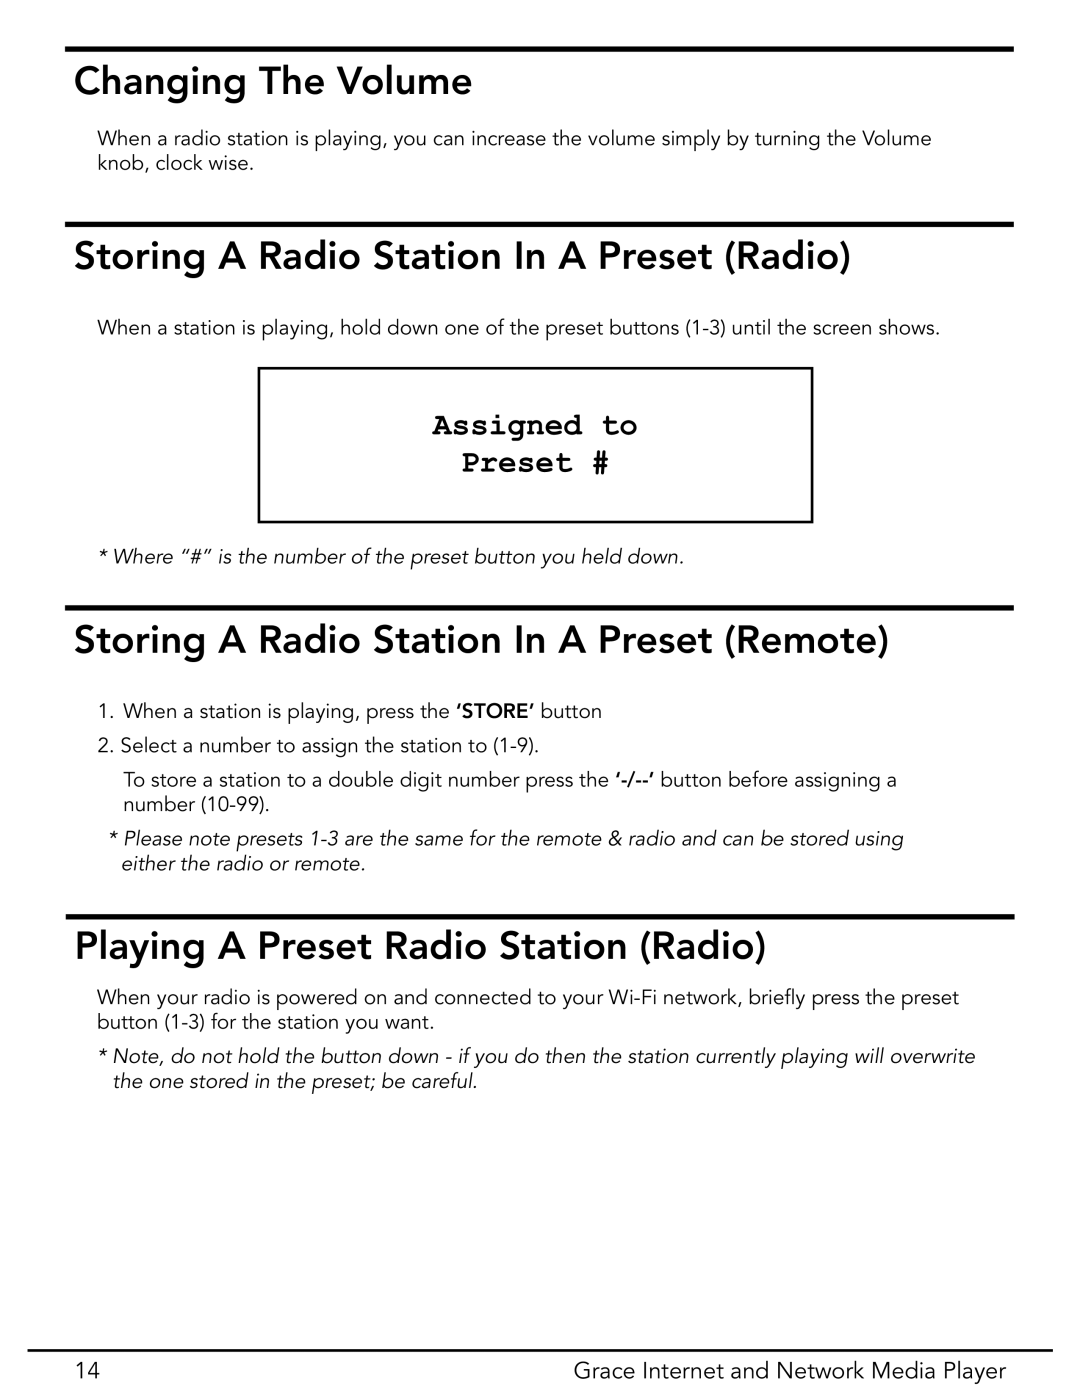 Grace GDI-IR3020 Changing The Volume, Storing A Radio Station In A Preset Radio, Playing A Preset Radio Station Radio 